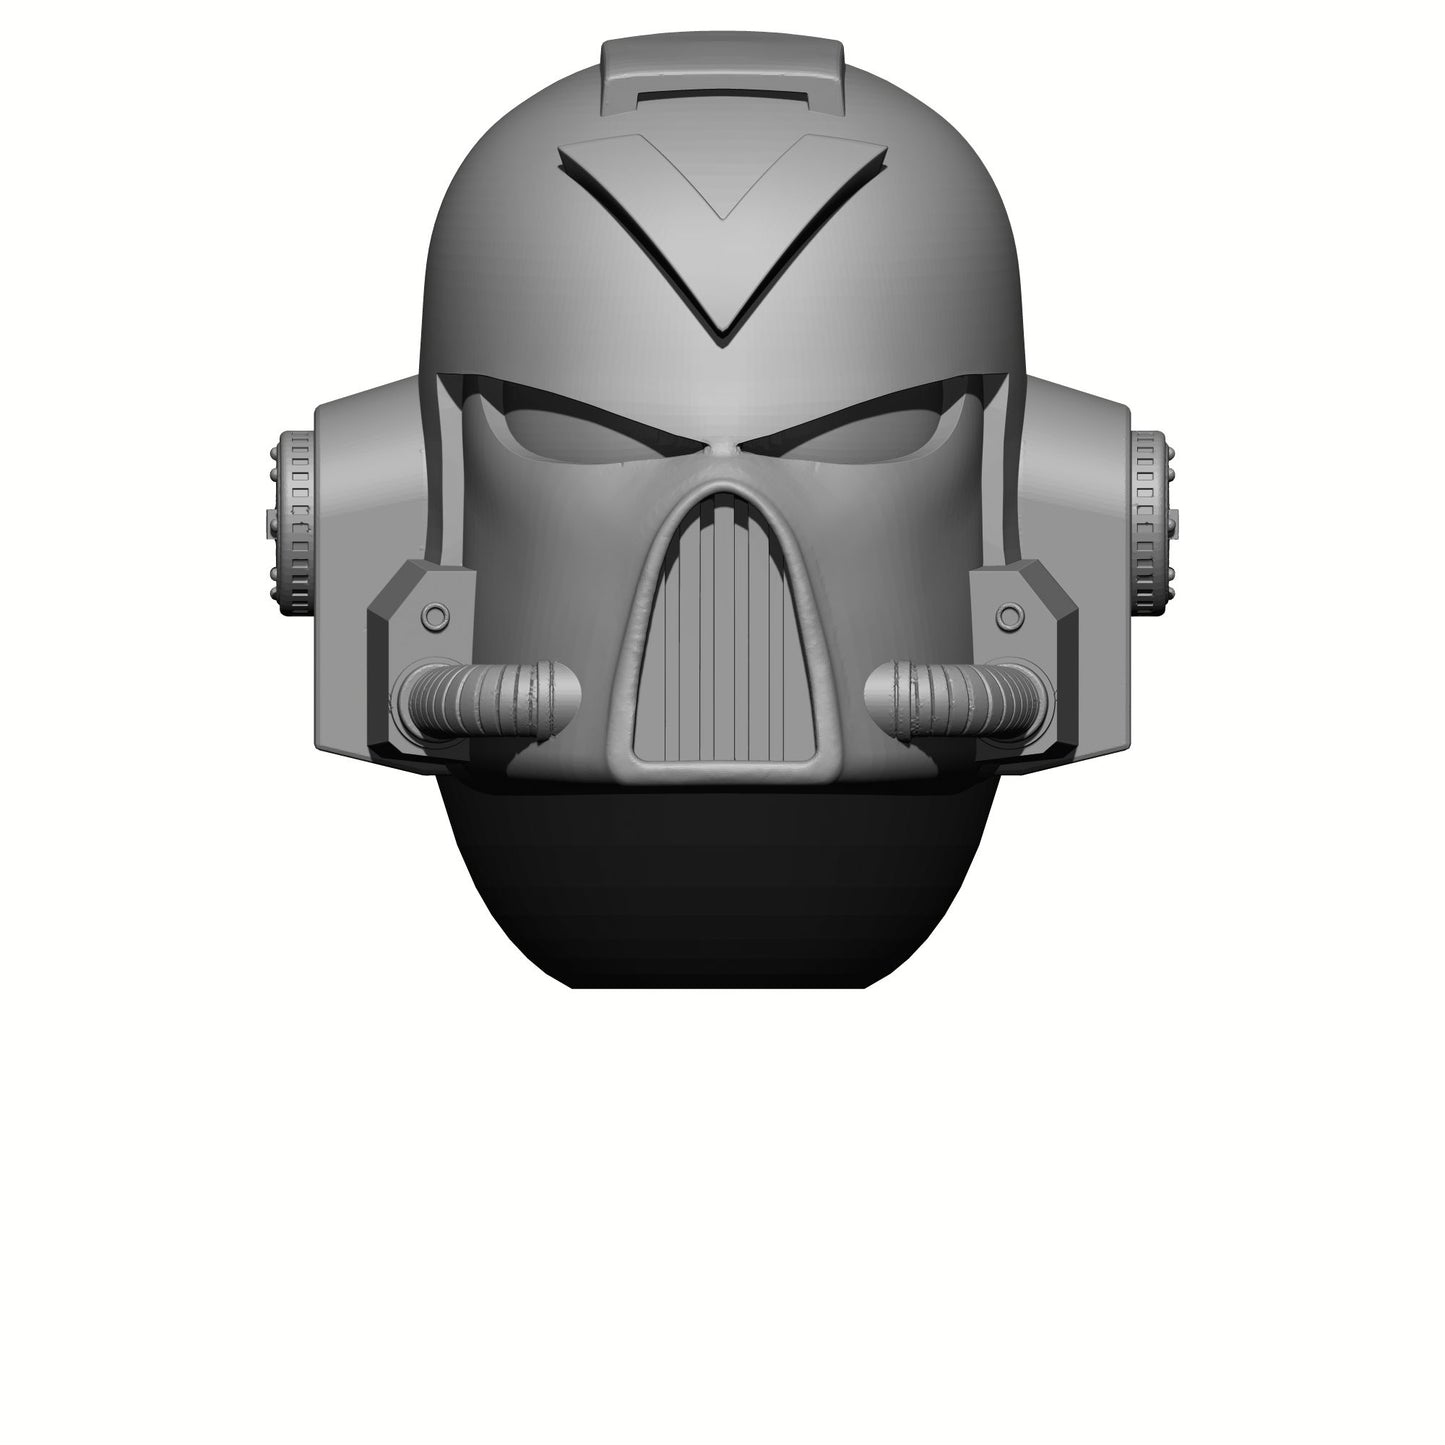 MK VII Helmet with Chevron: Helmet Swap for JoyToy Warhammer 40K Compatible Space Marine 1:18 4" Action Figures